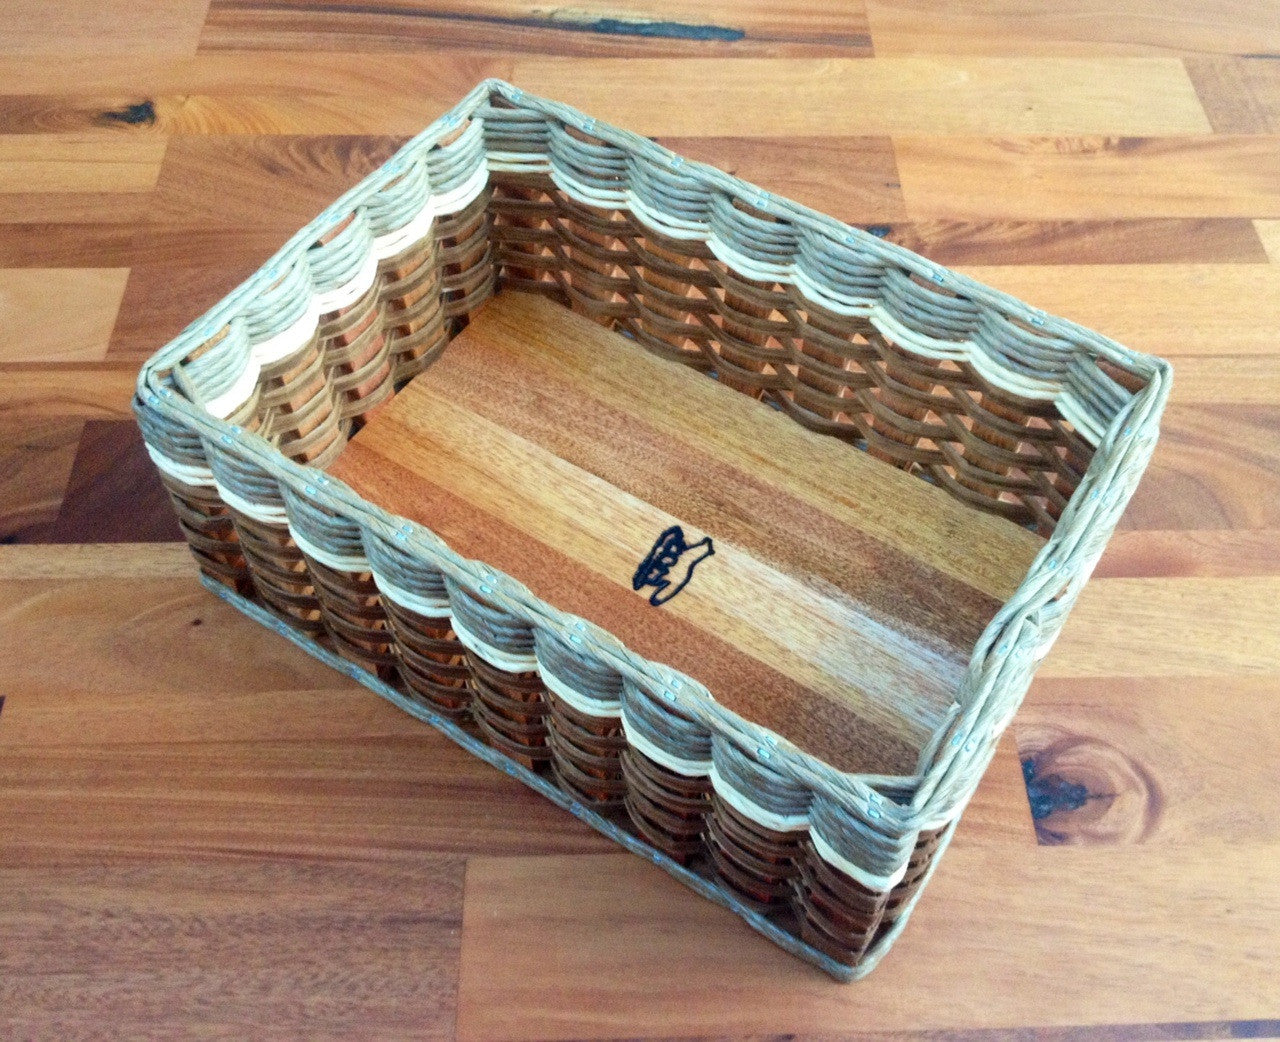 Shelf basket